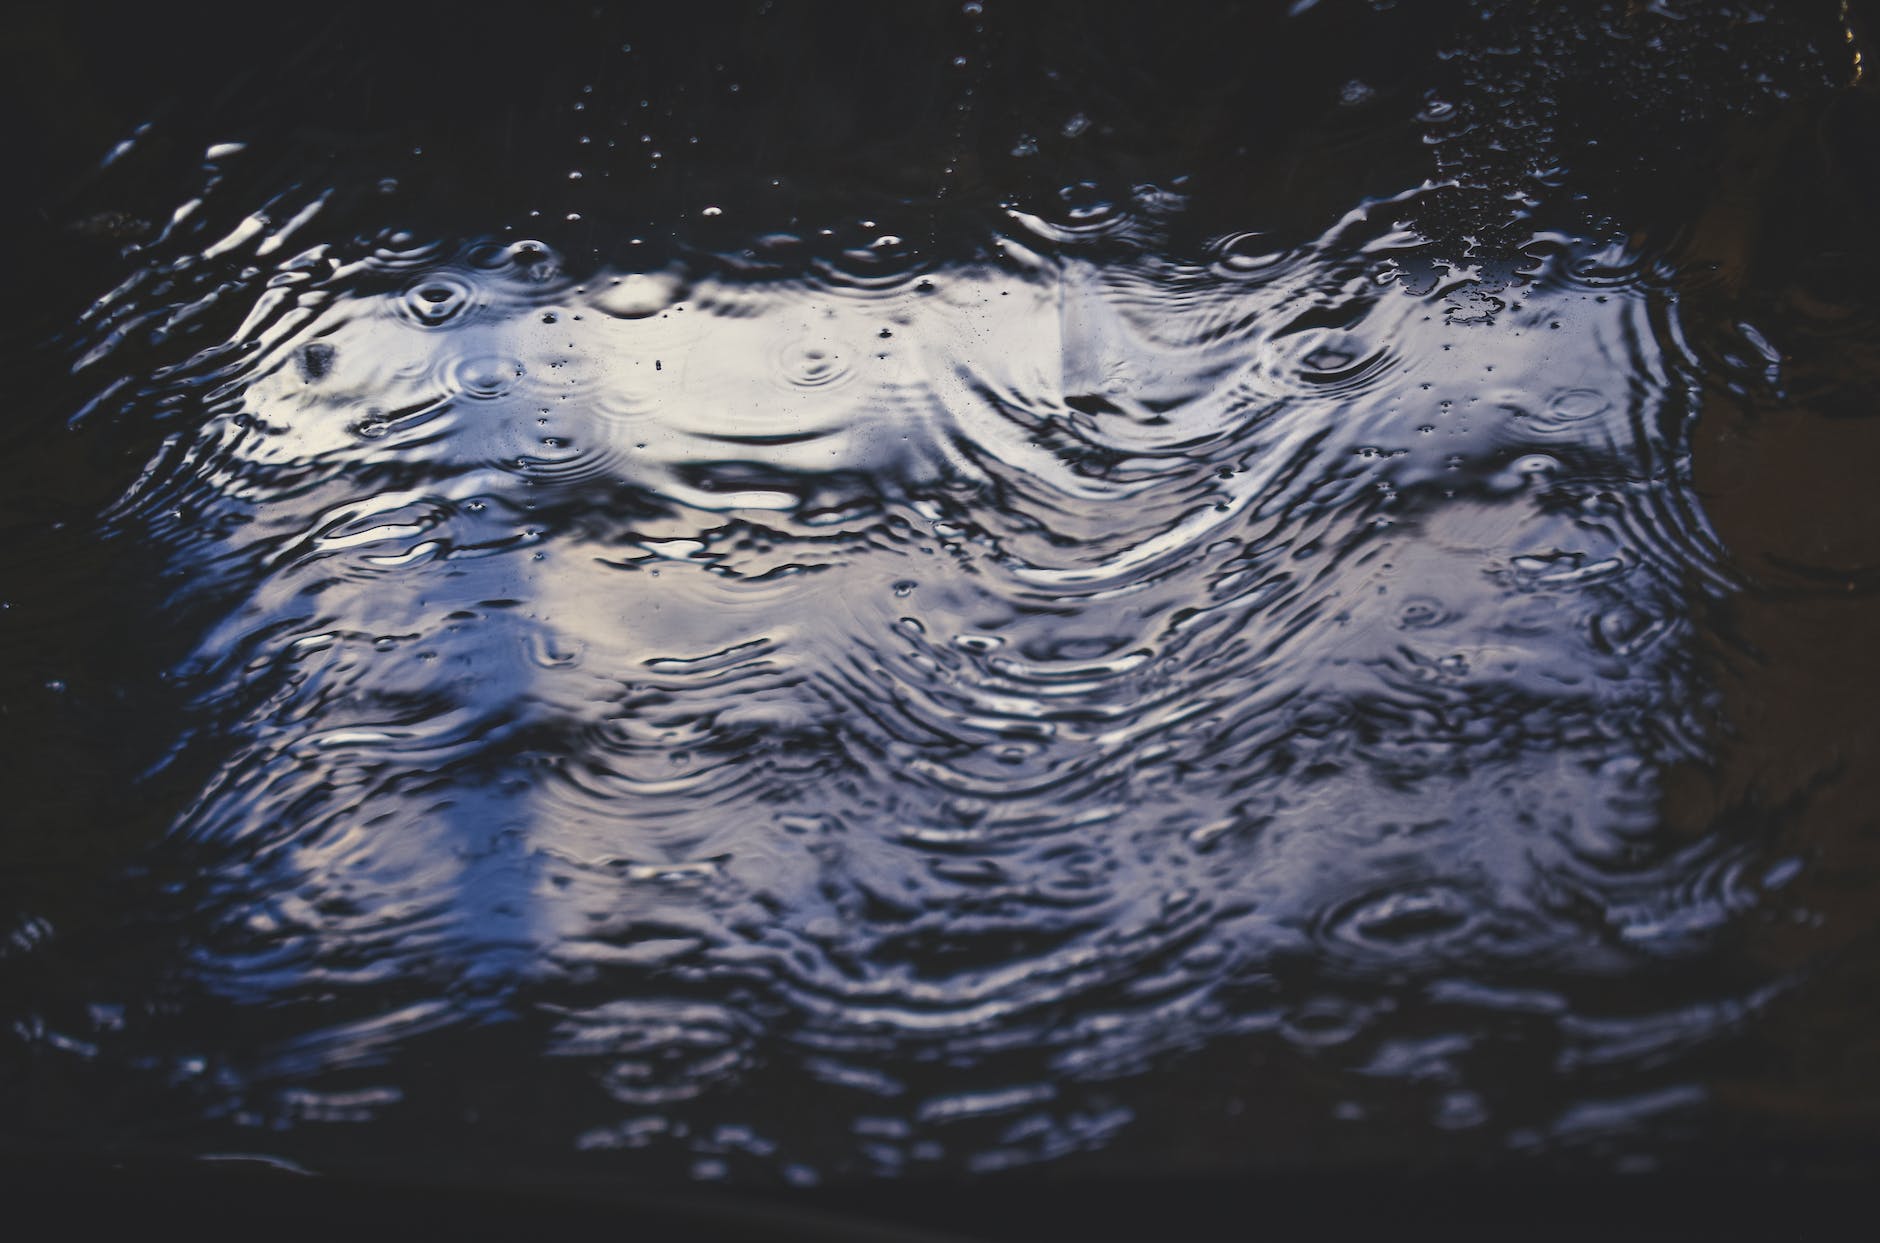 water droplets in flowing water